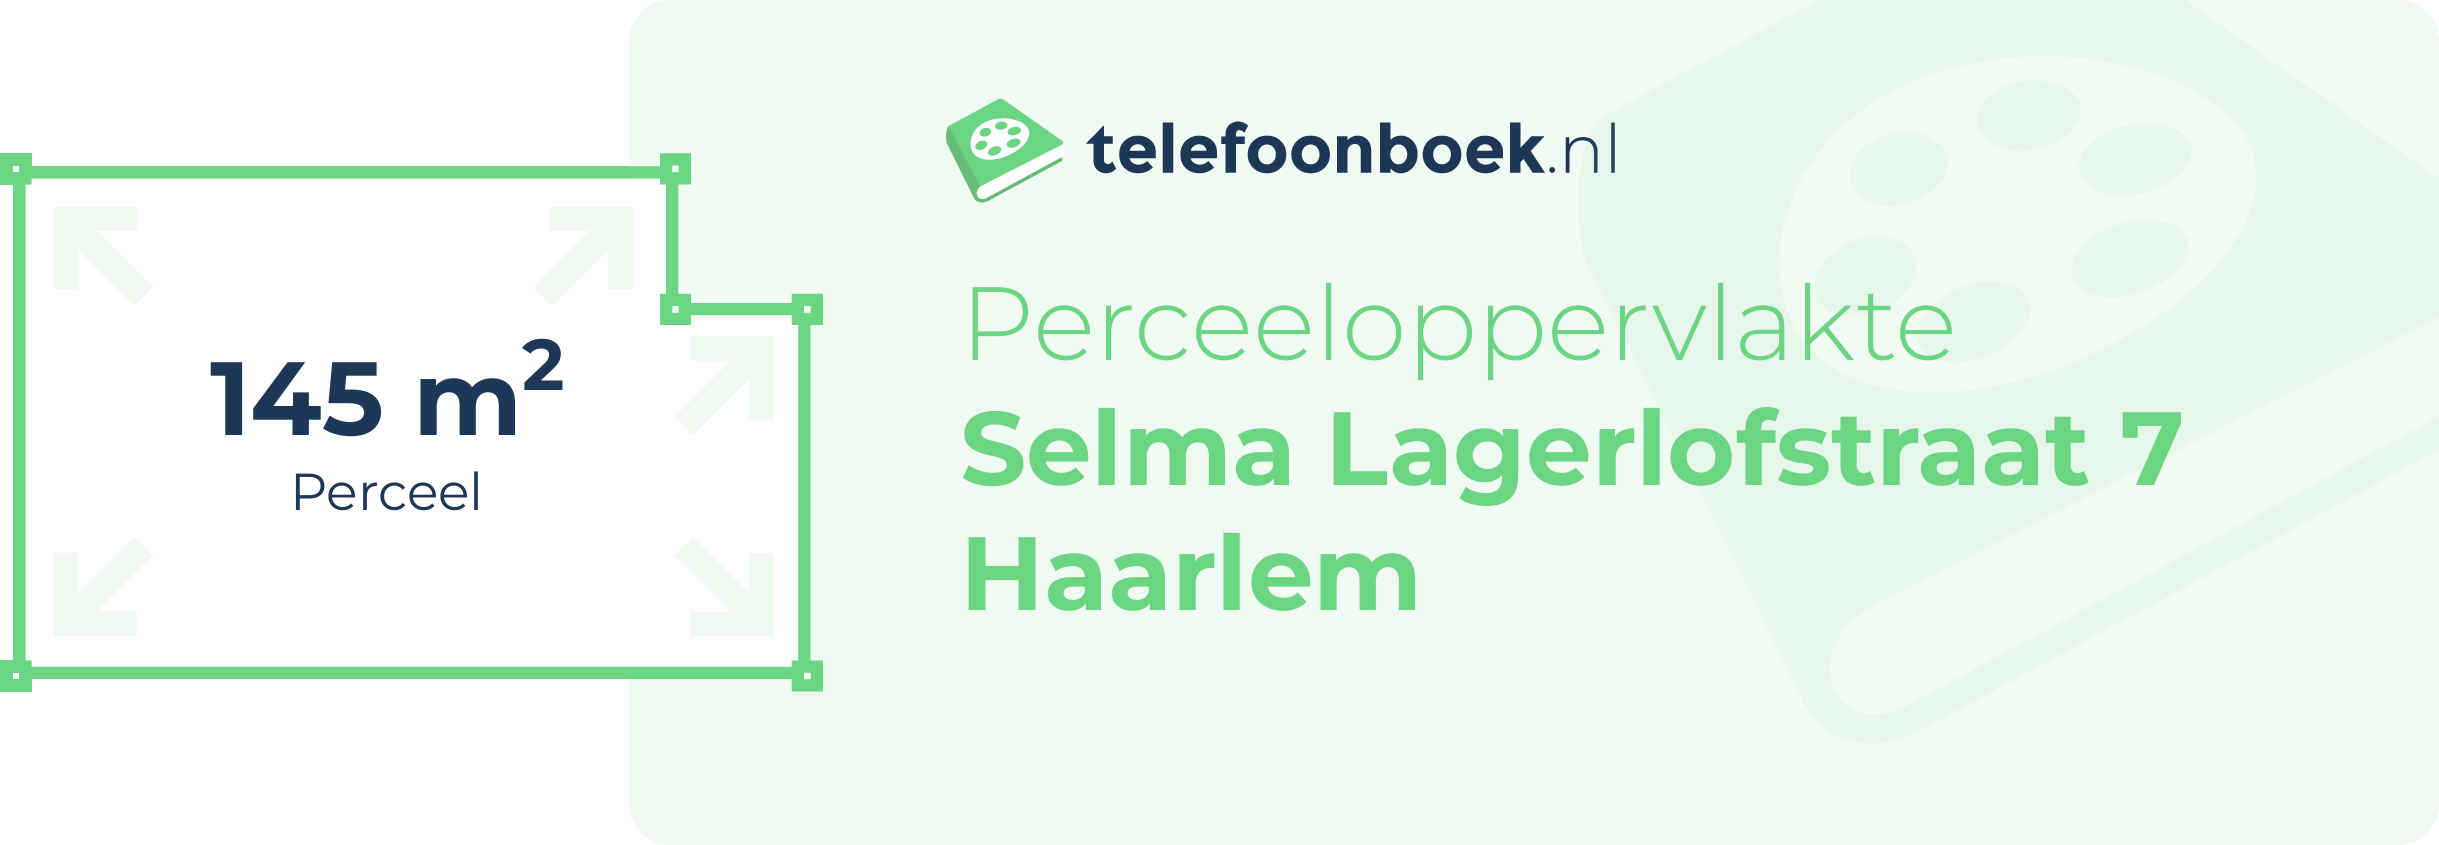 Perceeloppervlakte Selma Lagerlofstraat 7 Haarlem